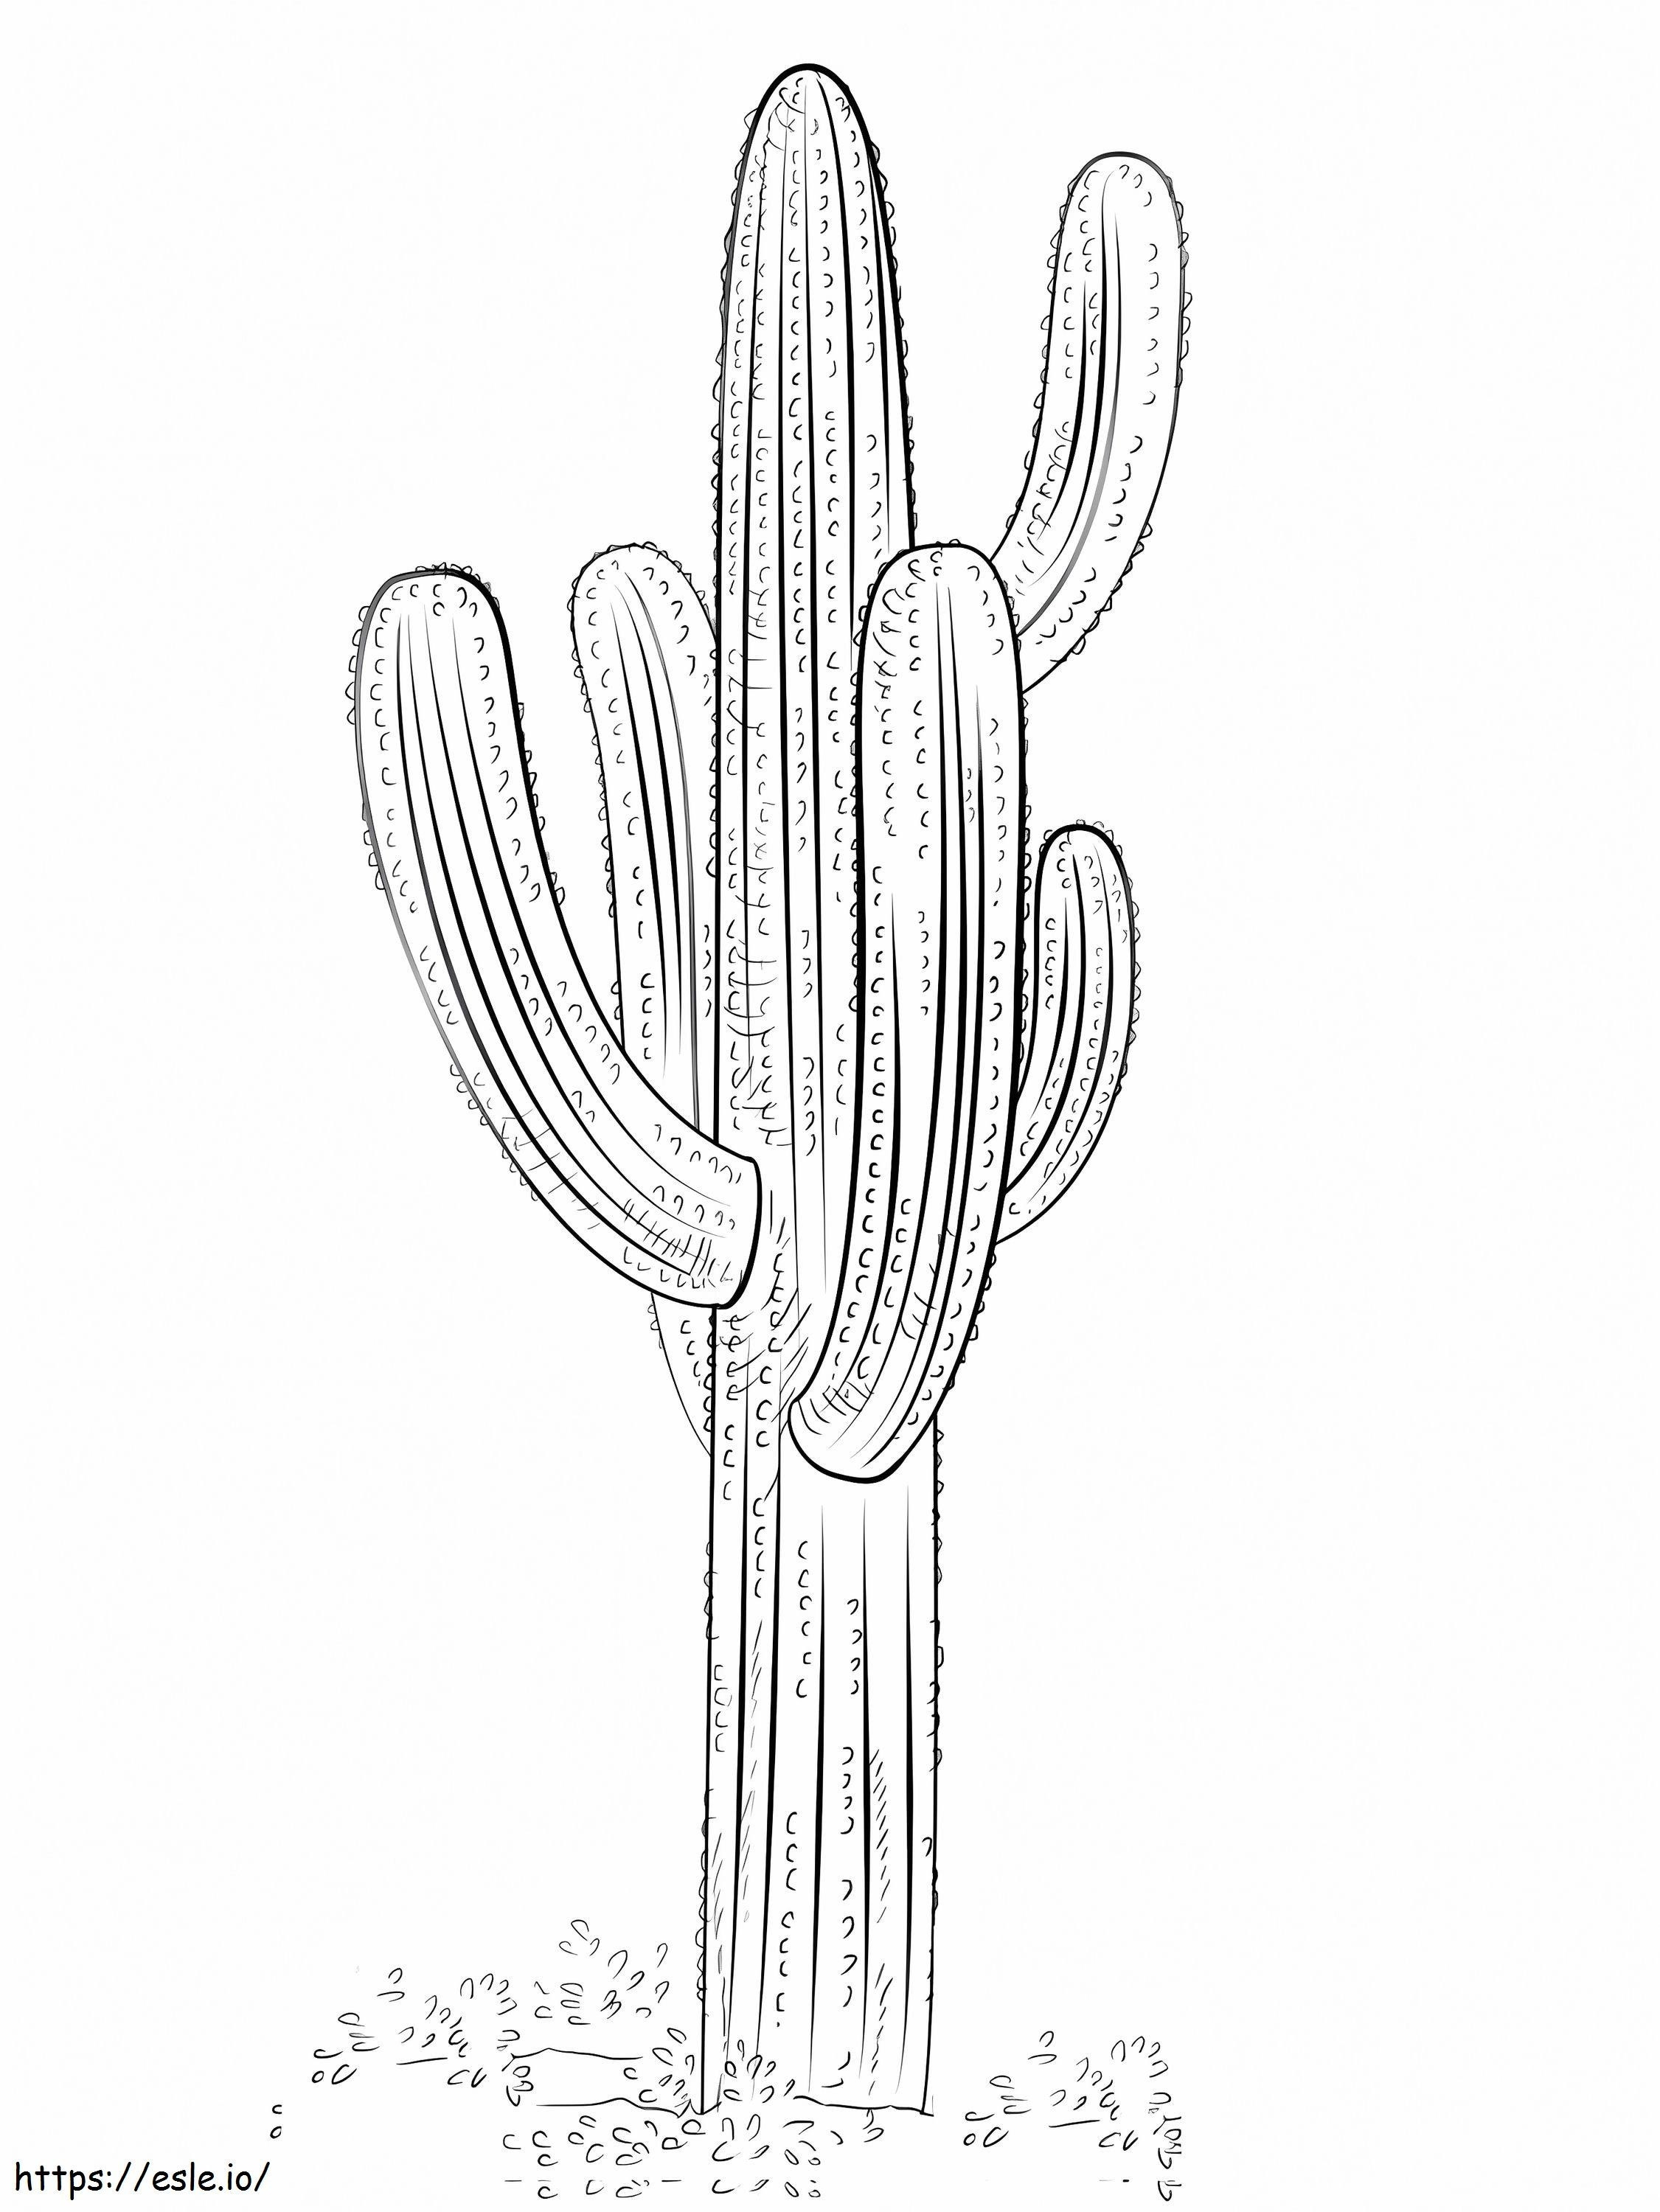 1595810936_Saguaro Cactus1 coloring page